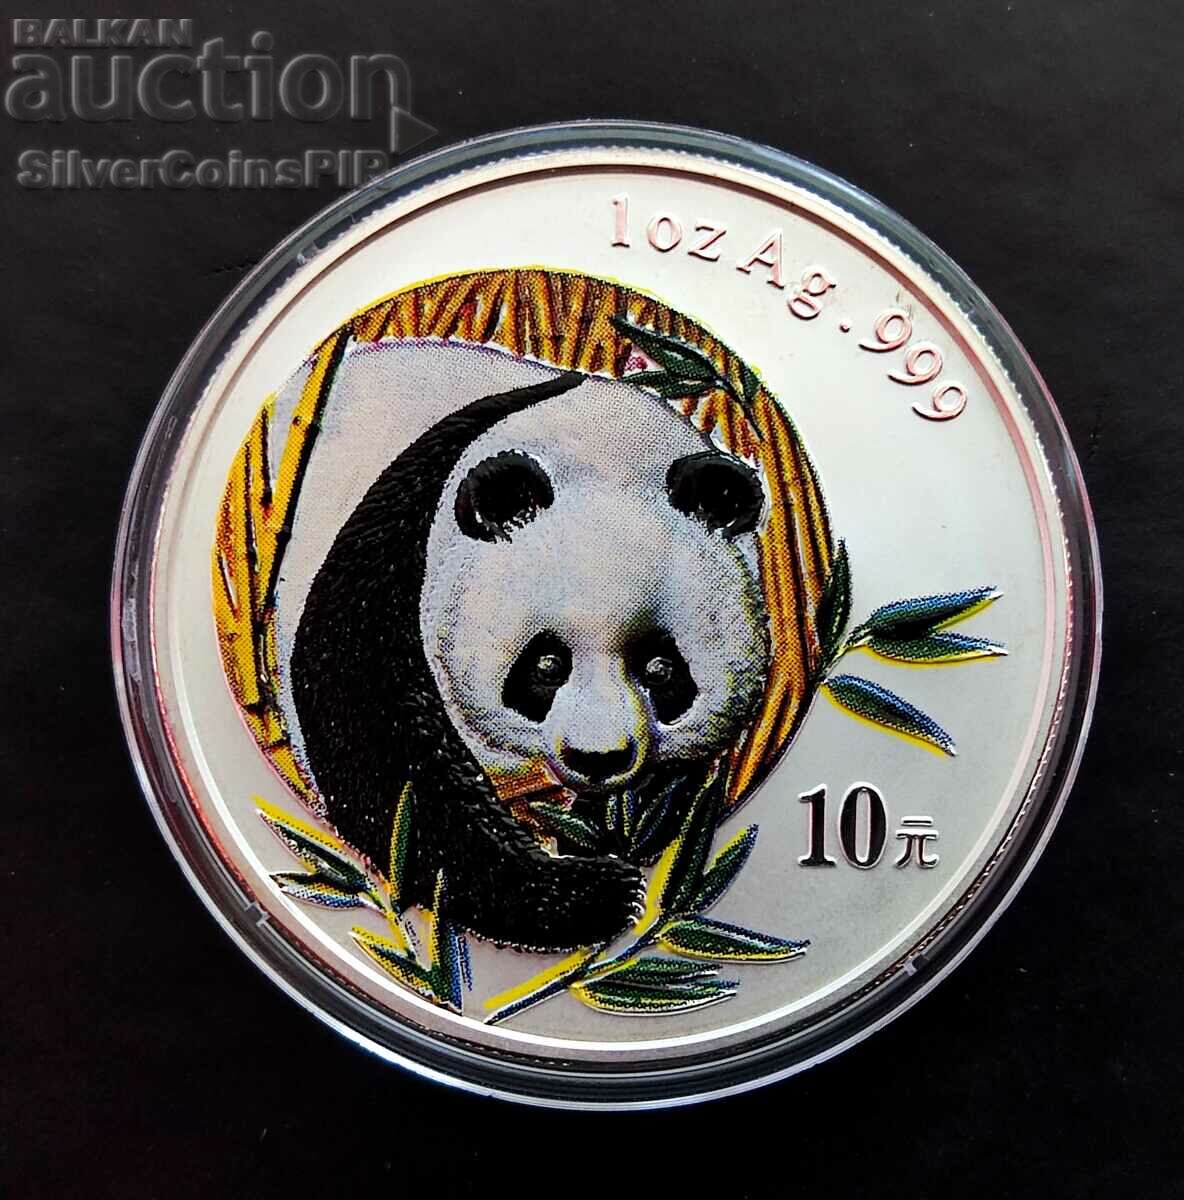 Argint 1 oz China Panda 2003 versiunea color 10 yuani